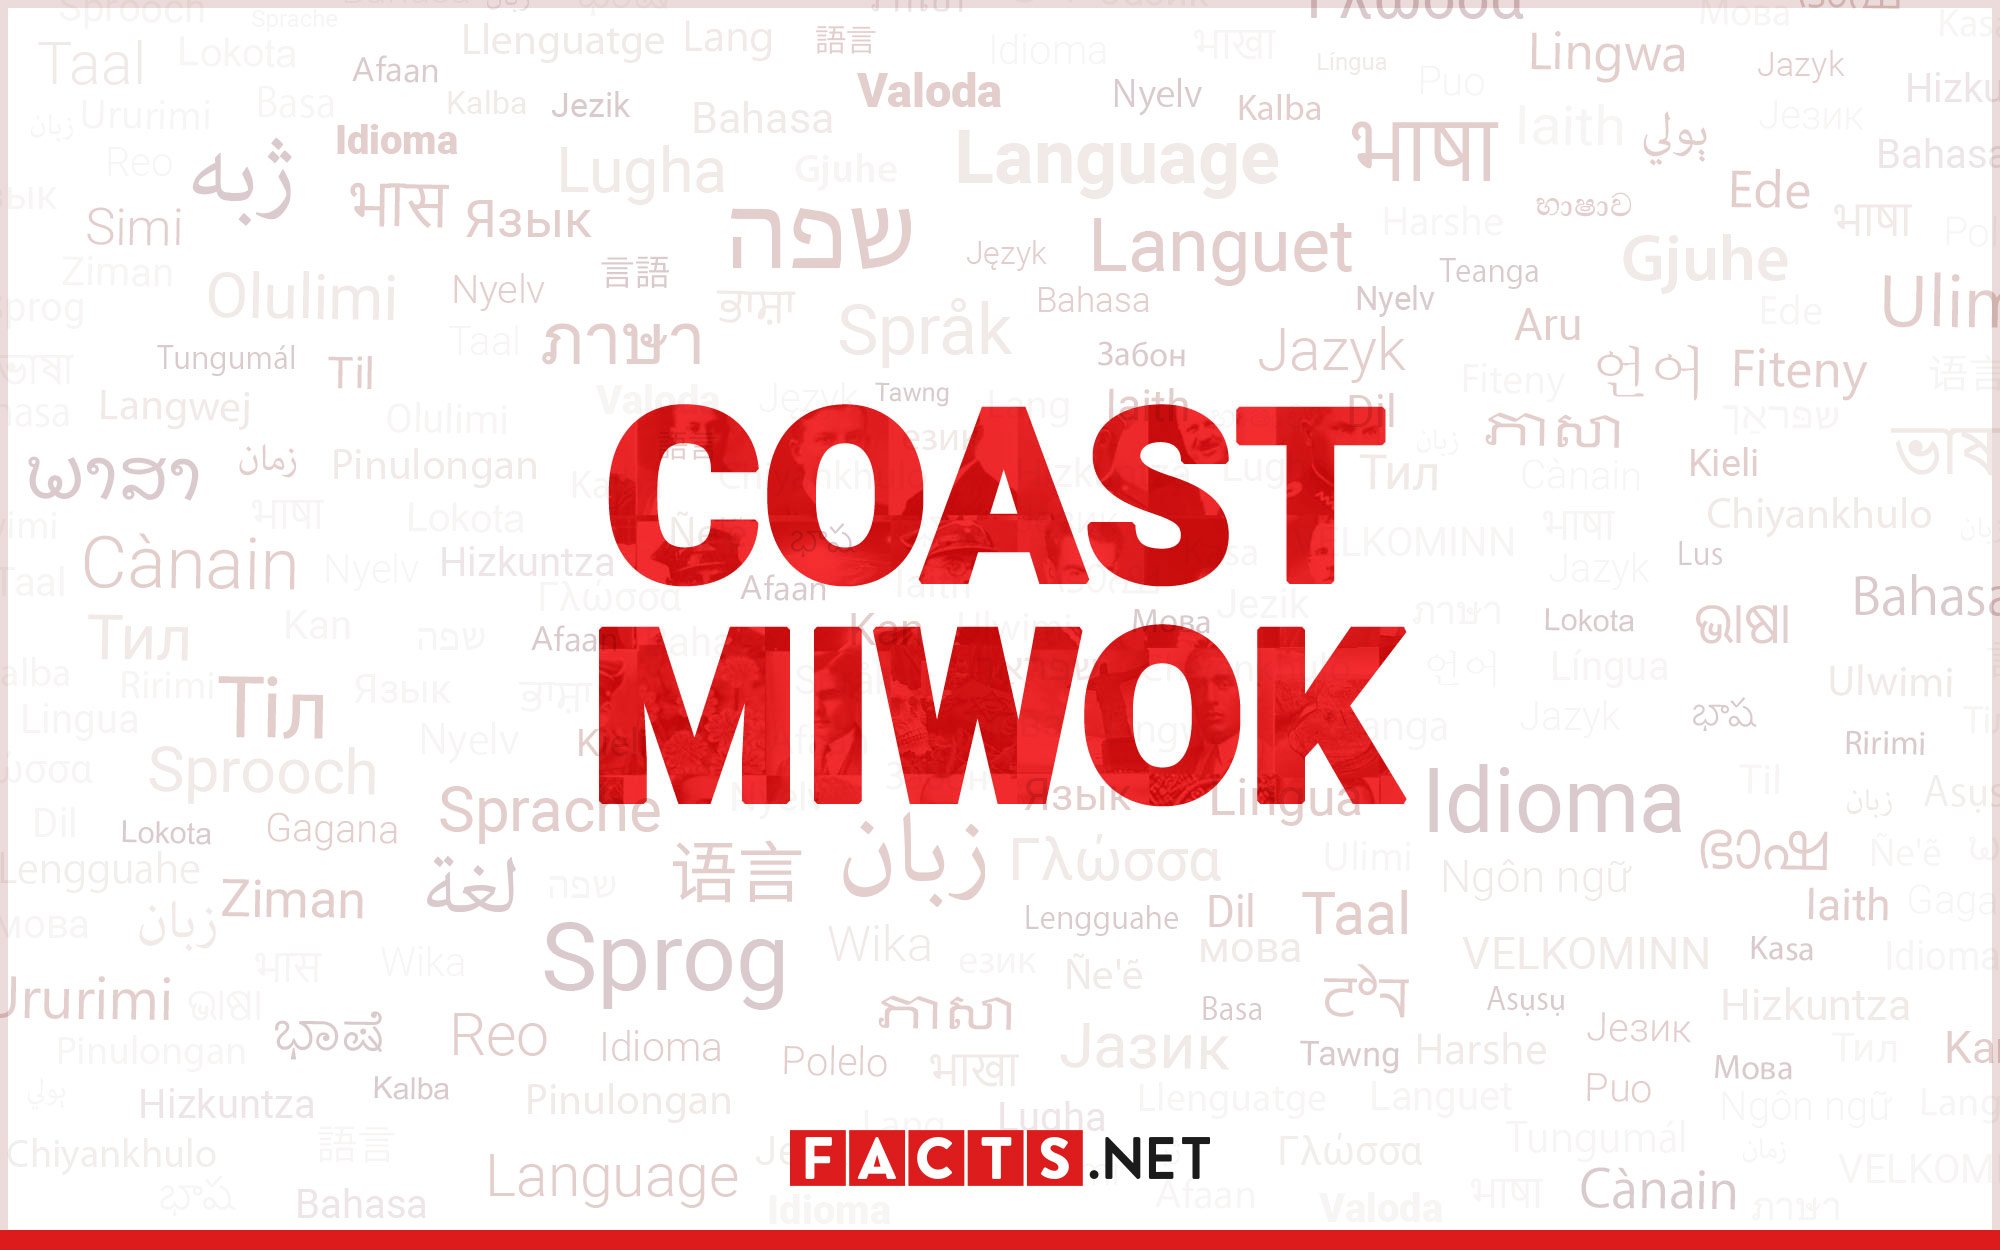 15-captivating-facts-about-coast-miwok